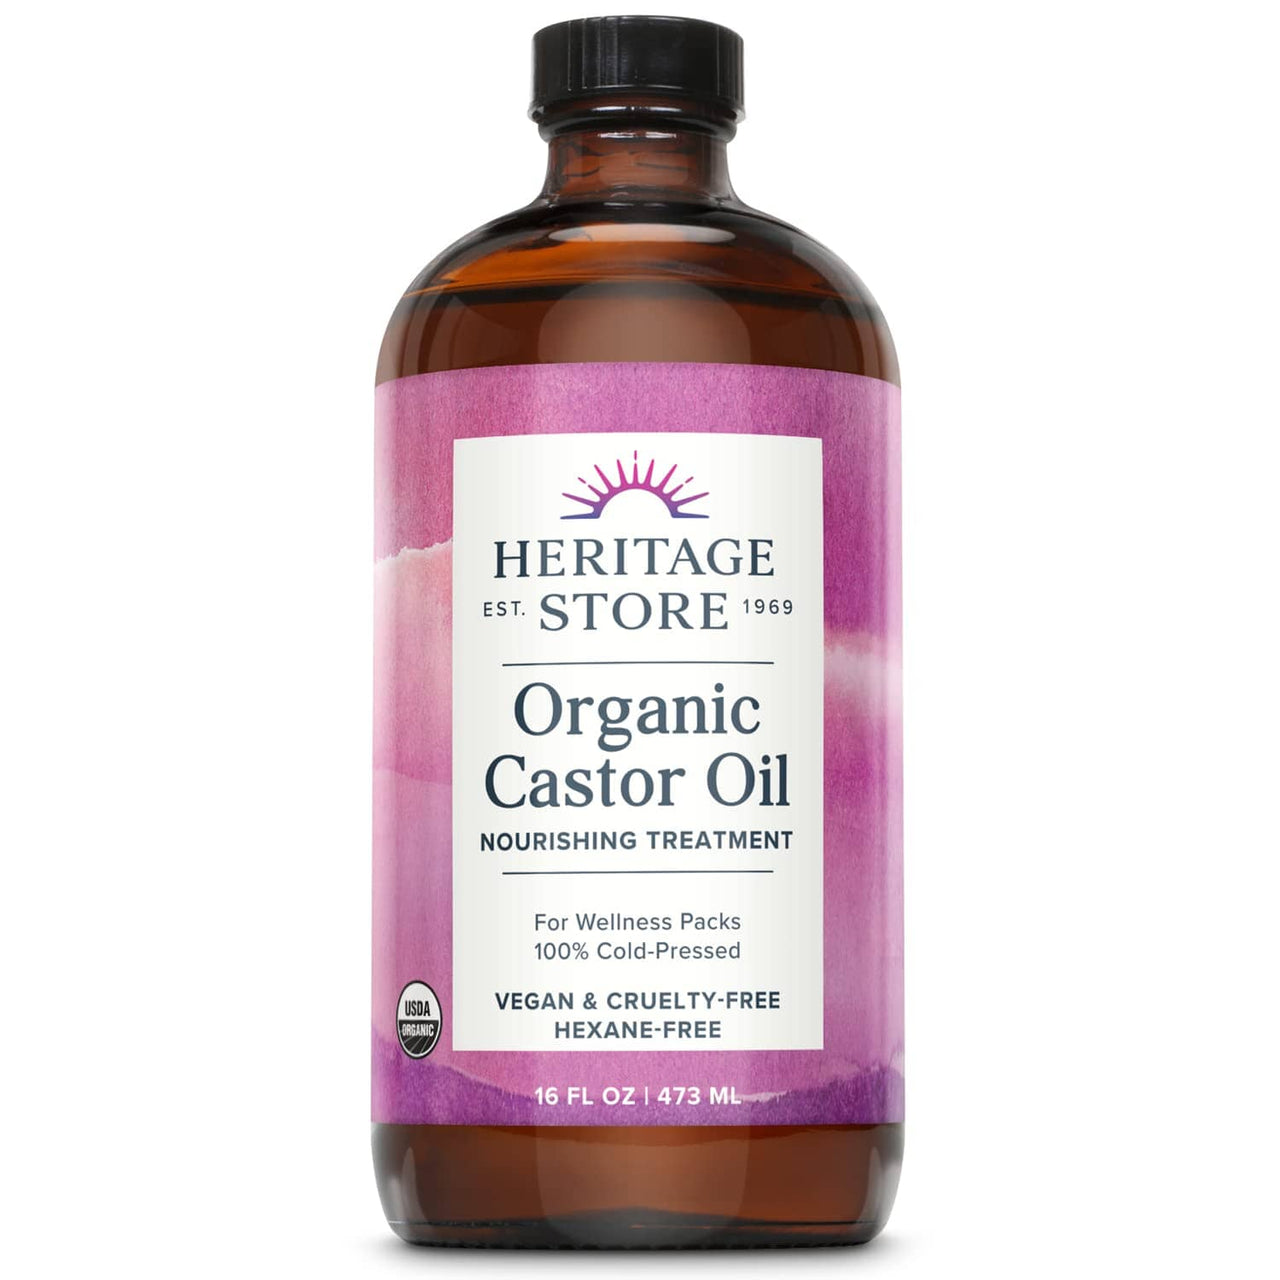 HERITAGE STORE 16 Fl Oz Heritage Store Organic Castor Oil | Cold Pressed